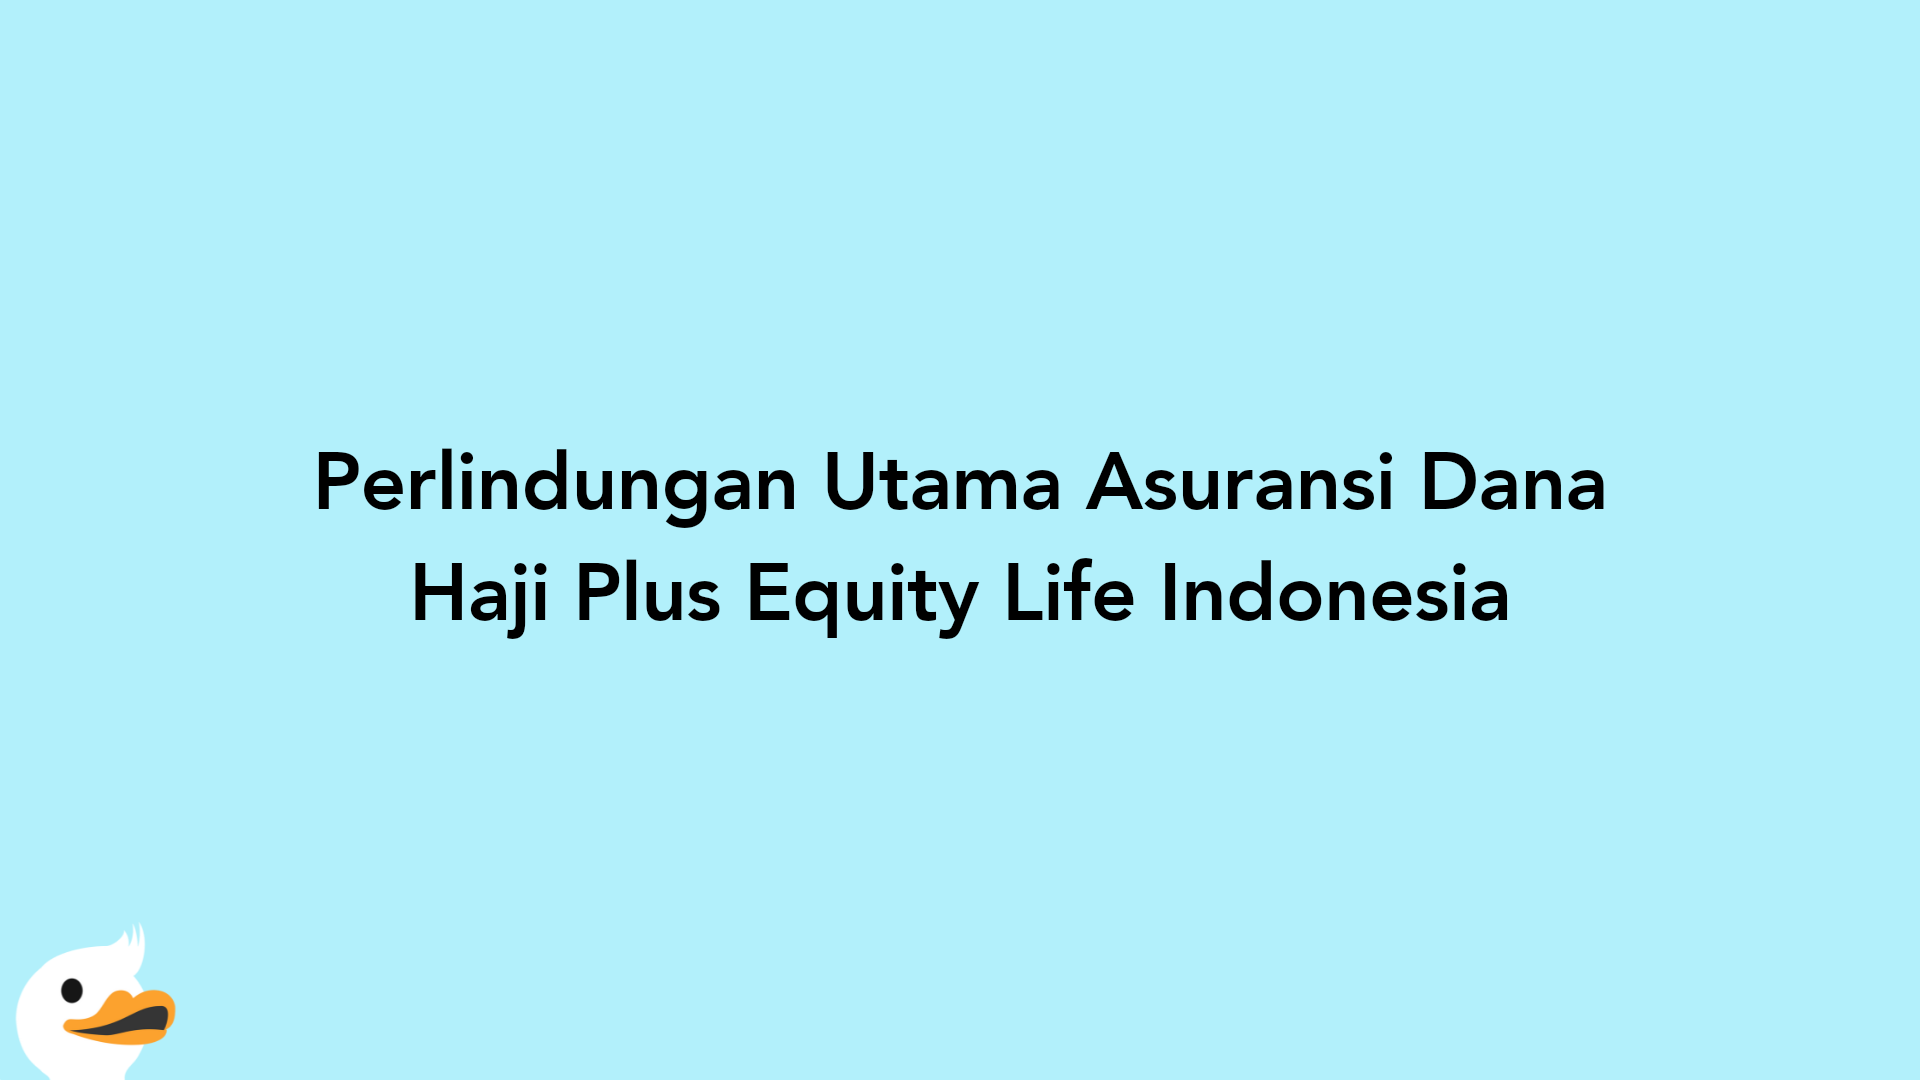 Perlindungan Utama Asuransi Dana Haji Plus Equity Life Indonesia